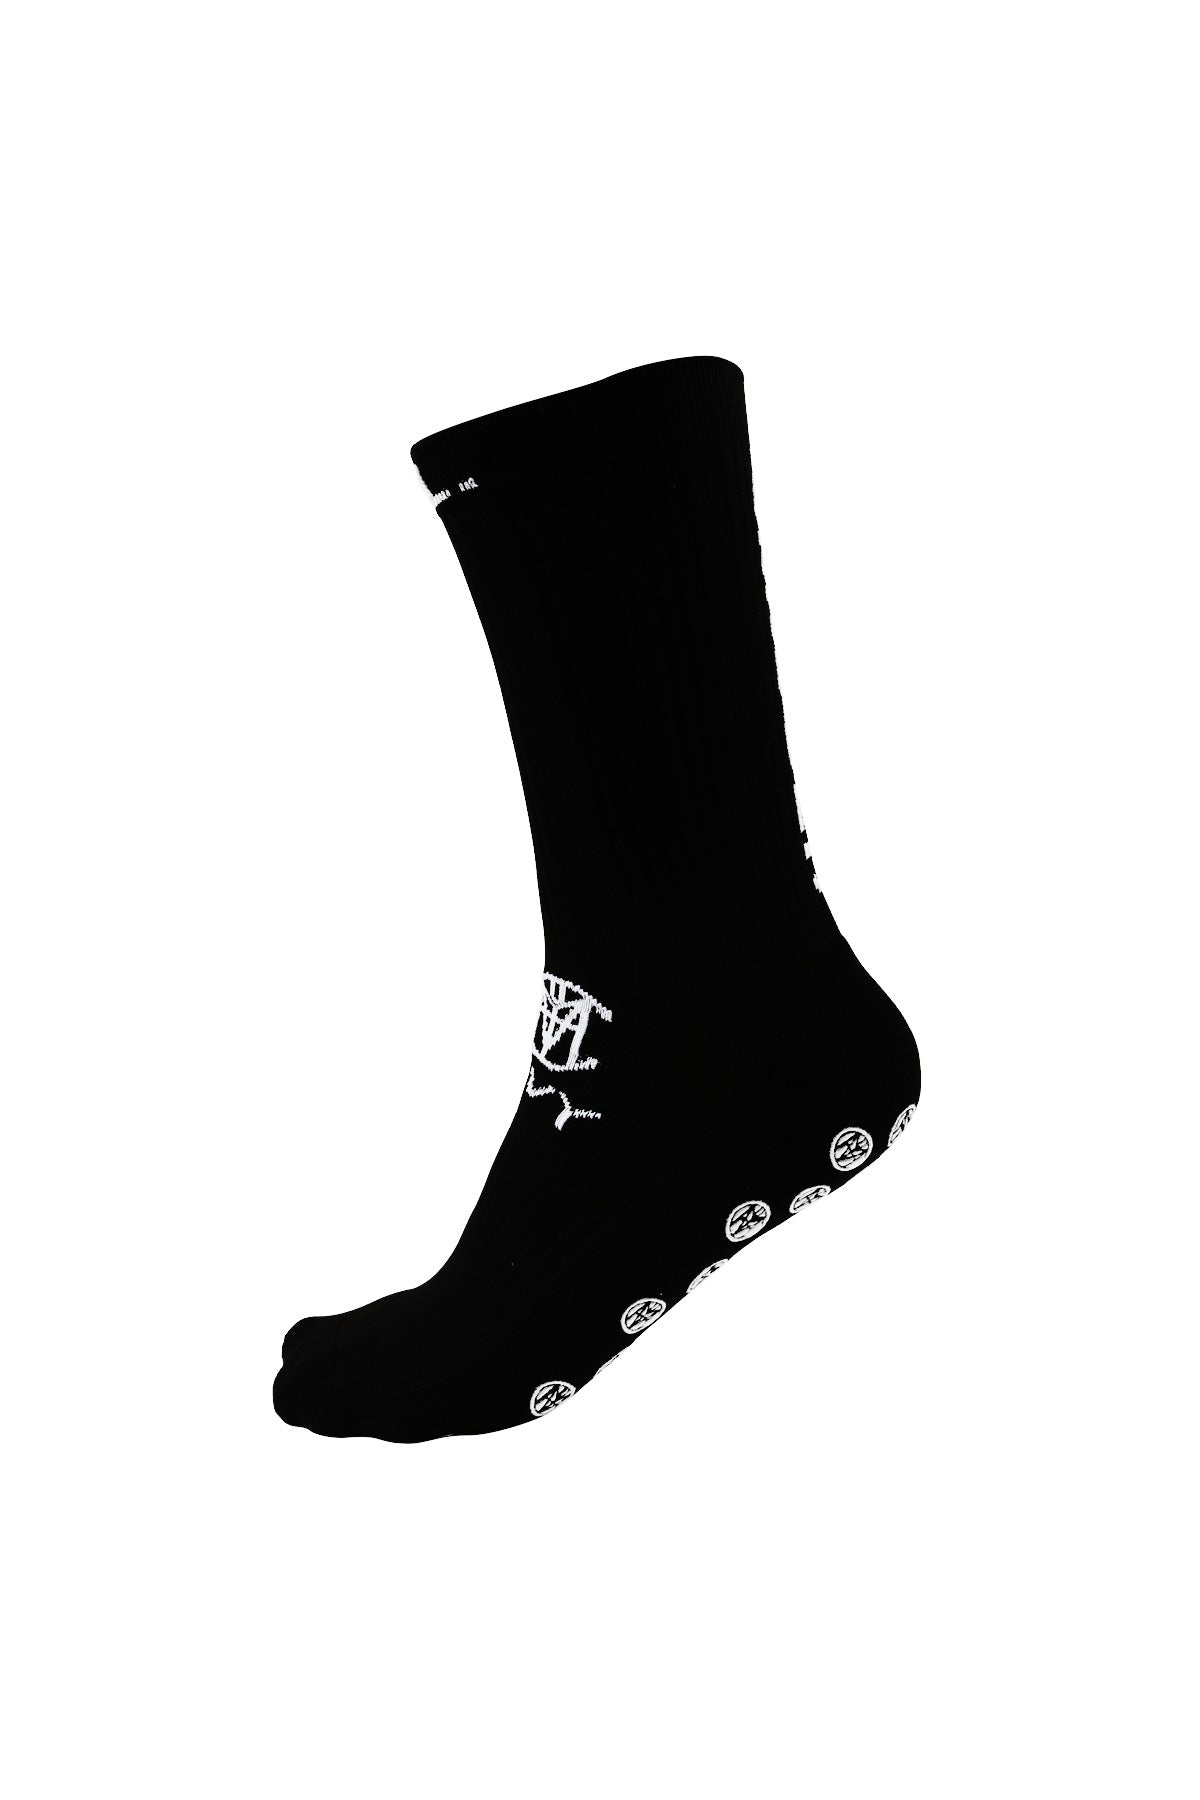 QCWQMYL Grip Socks for Men 1 Pairs Black Athletic Socks Non Skid Soccer  Socks Football Basketball Yoga Hospital Socks : : Clothing, Shoes  & Accessories